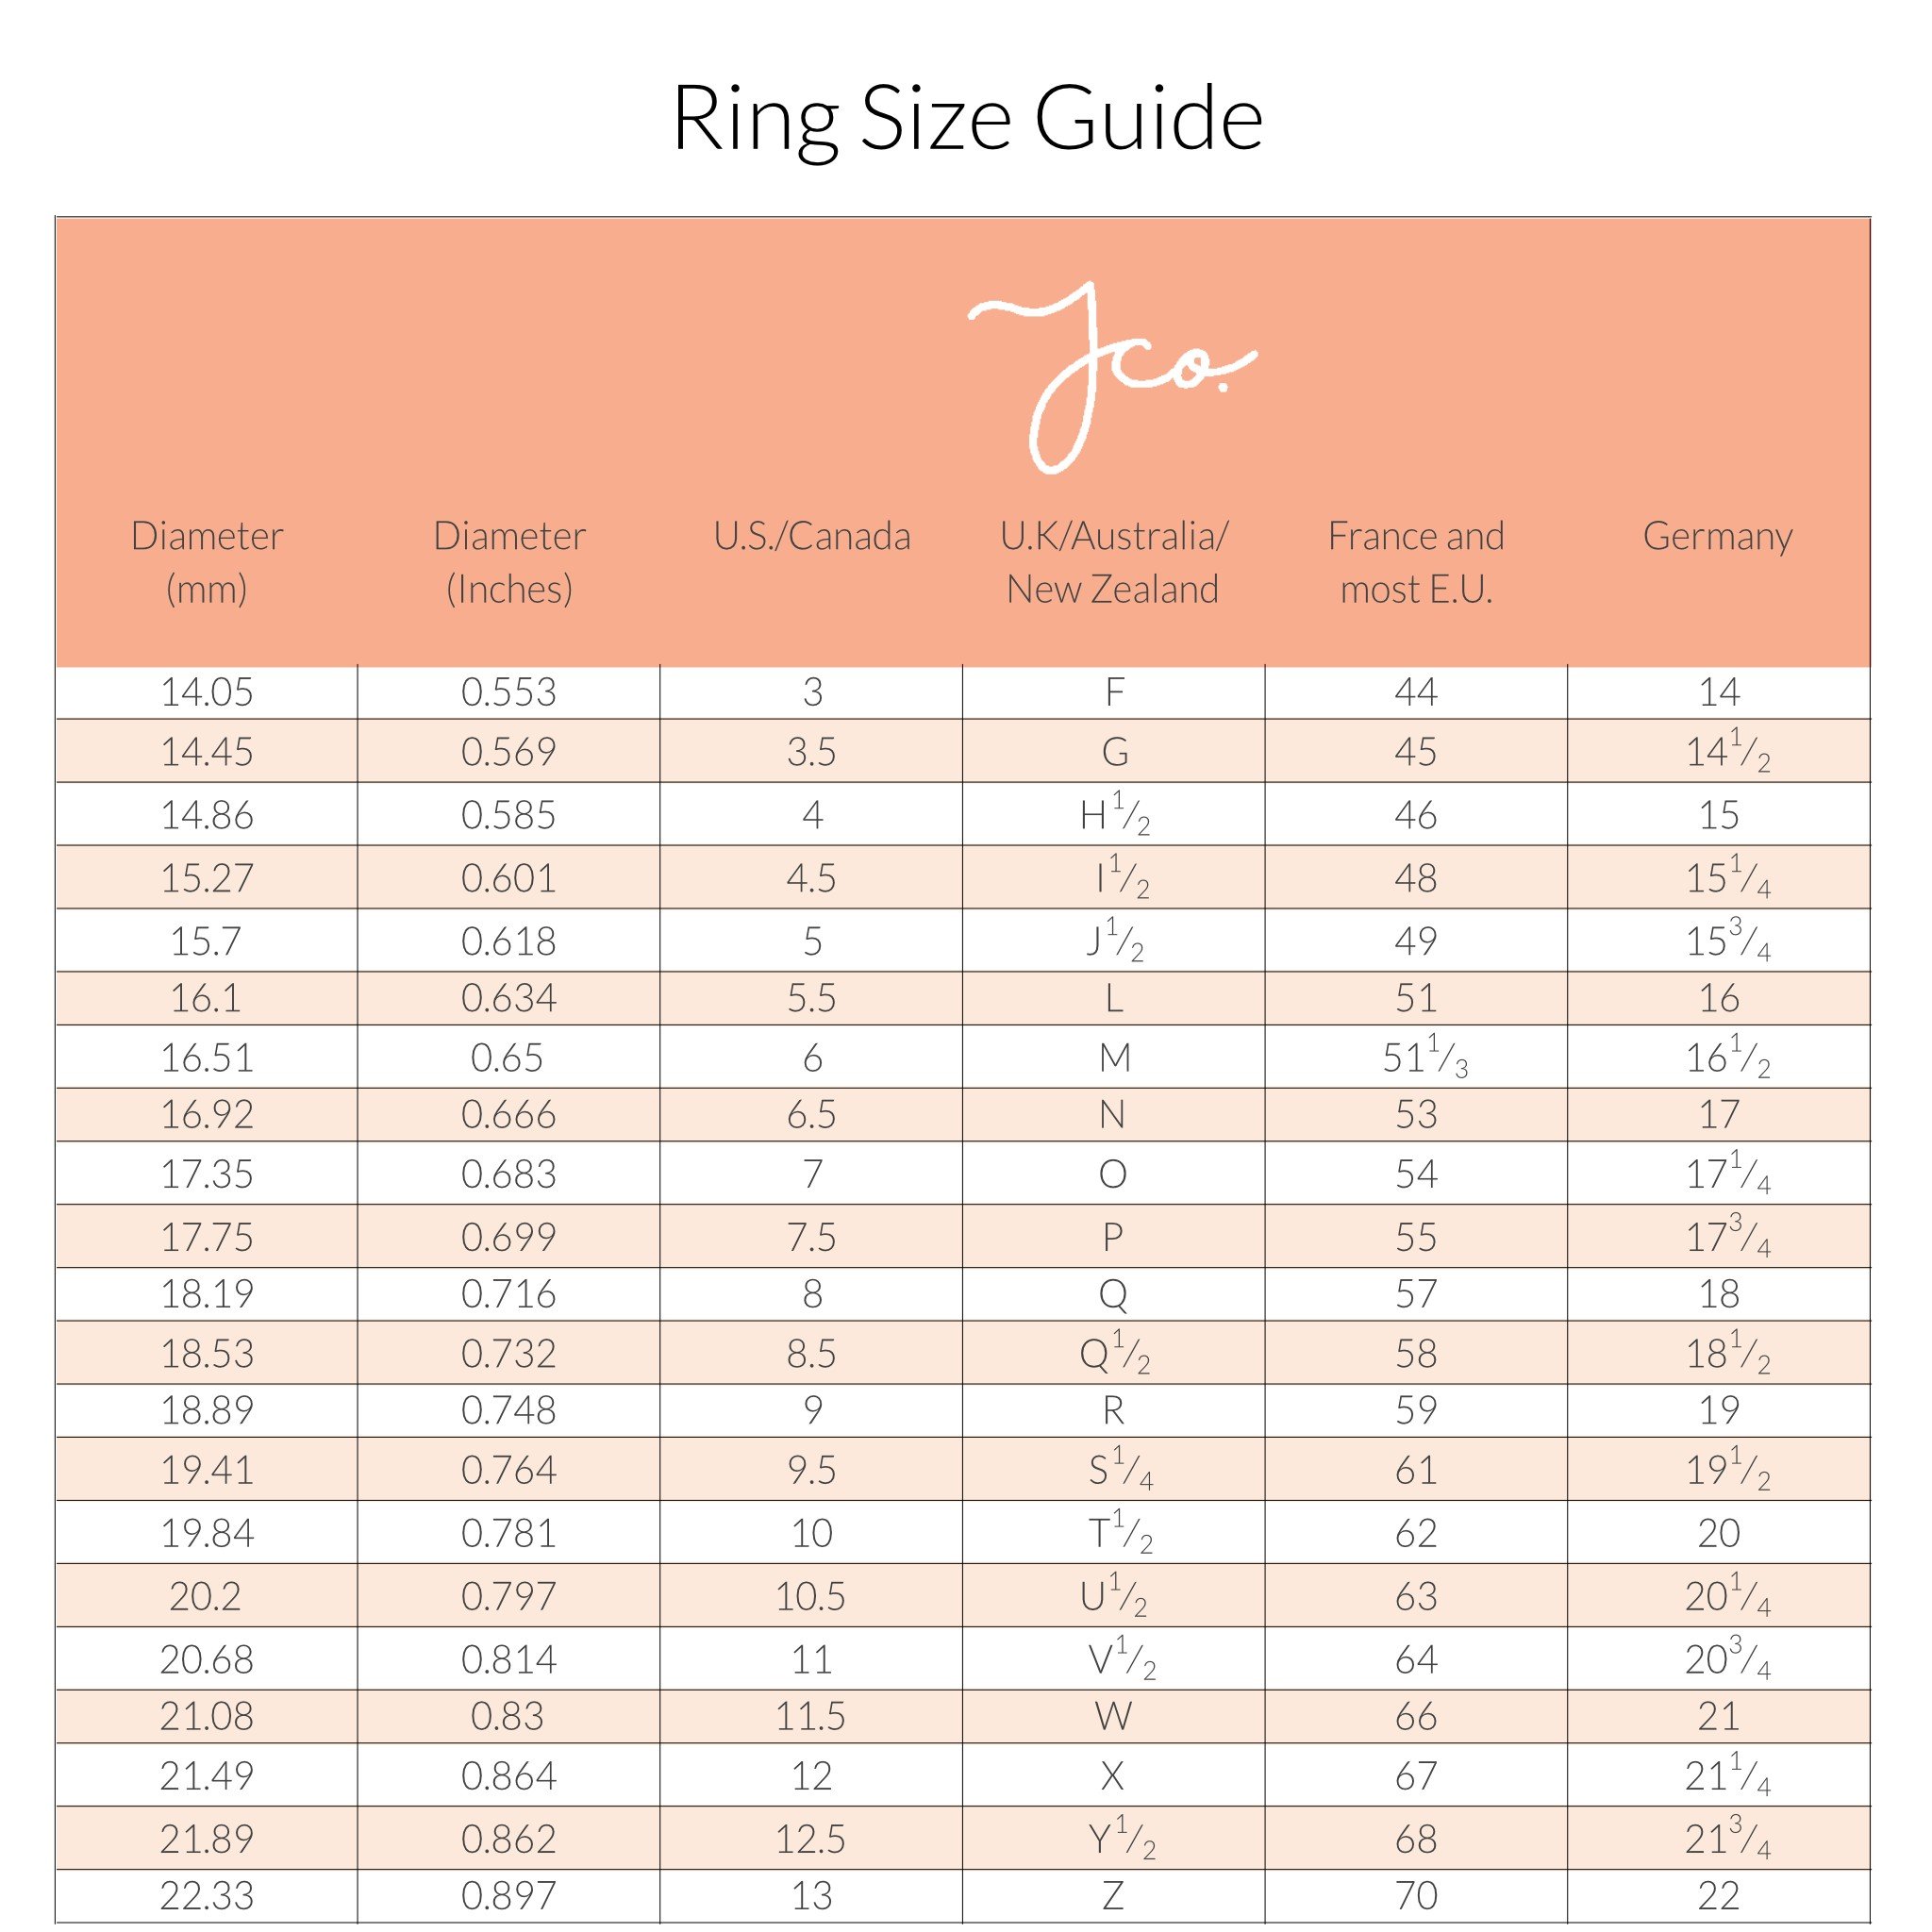 Ladies Ring Size Chart Printable